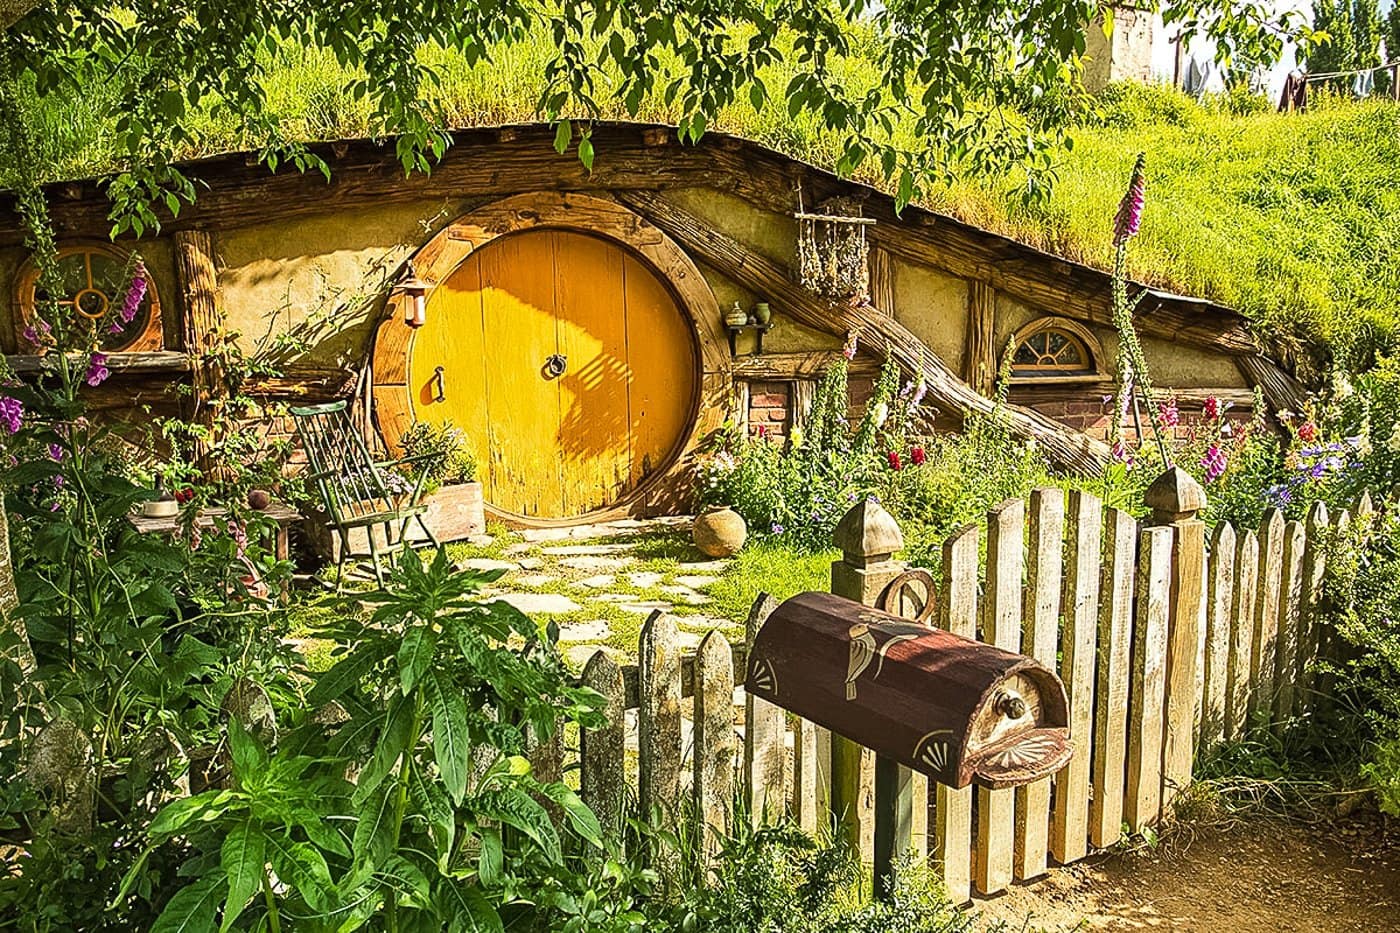 Hobbit-House-in-the-Shire-Hobbiton-Movie-Set-New-Zealand.jpg